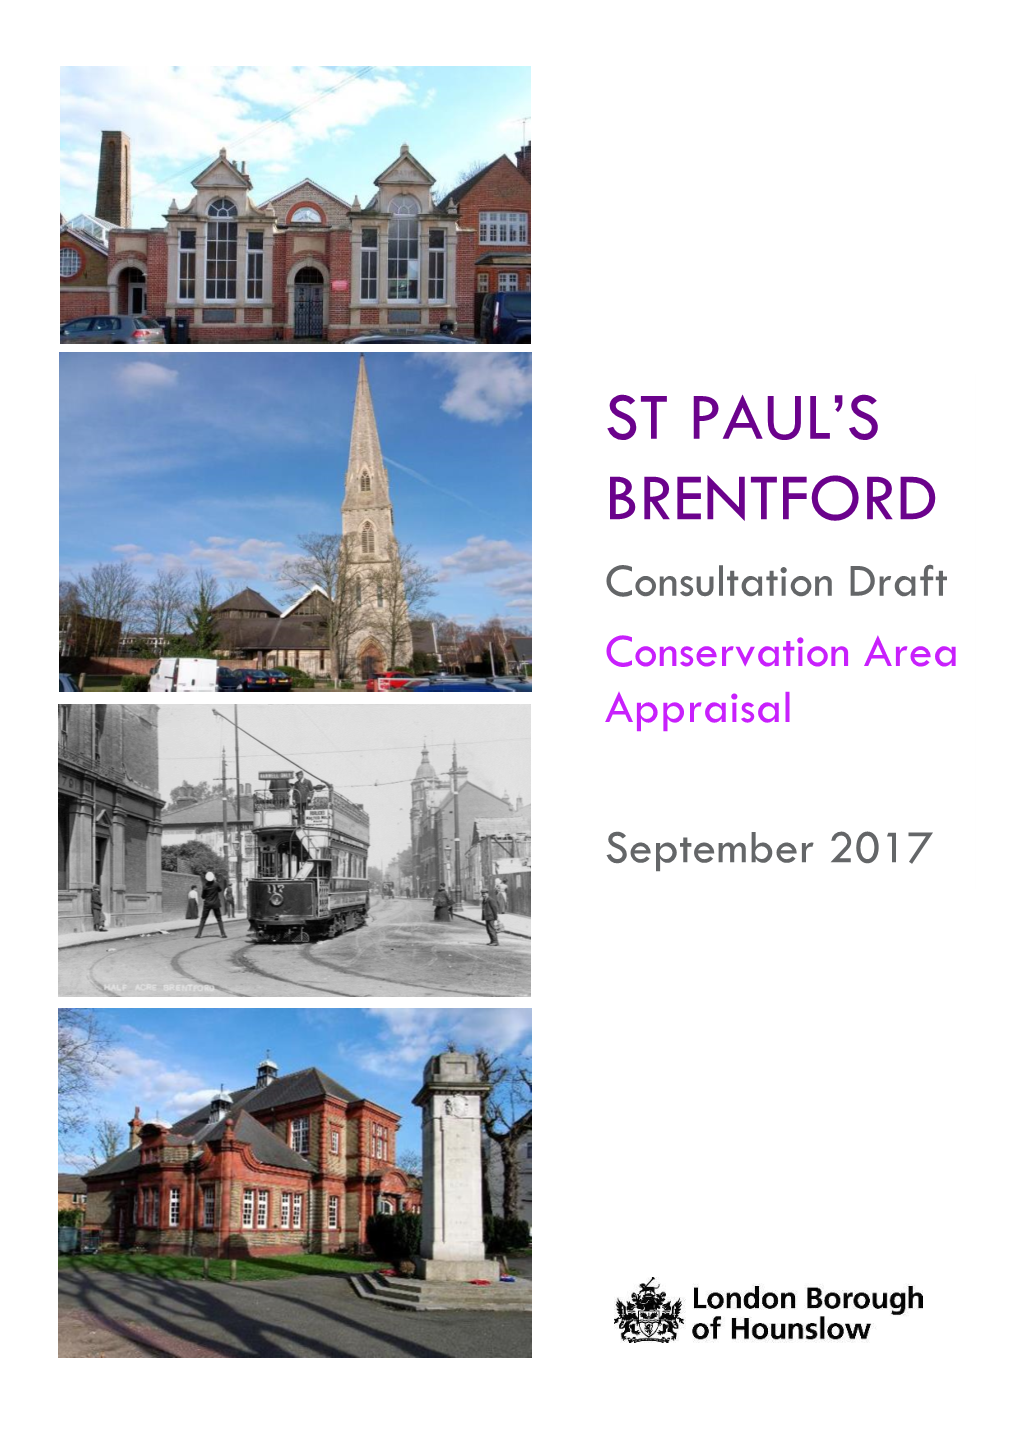 St Paul's Brentford